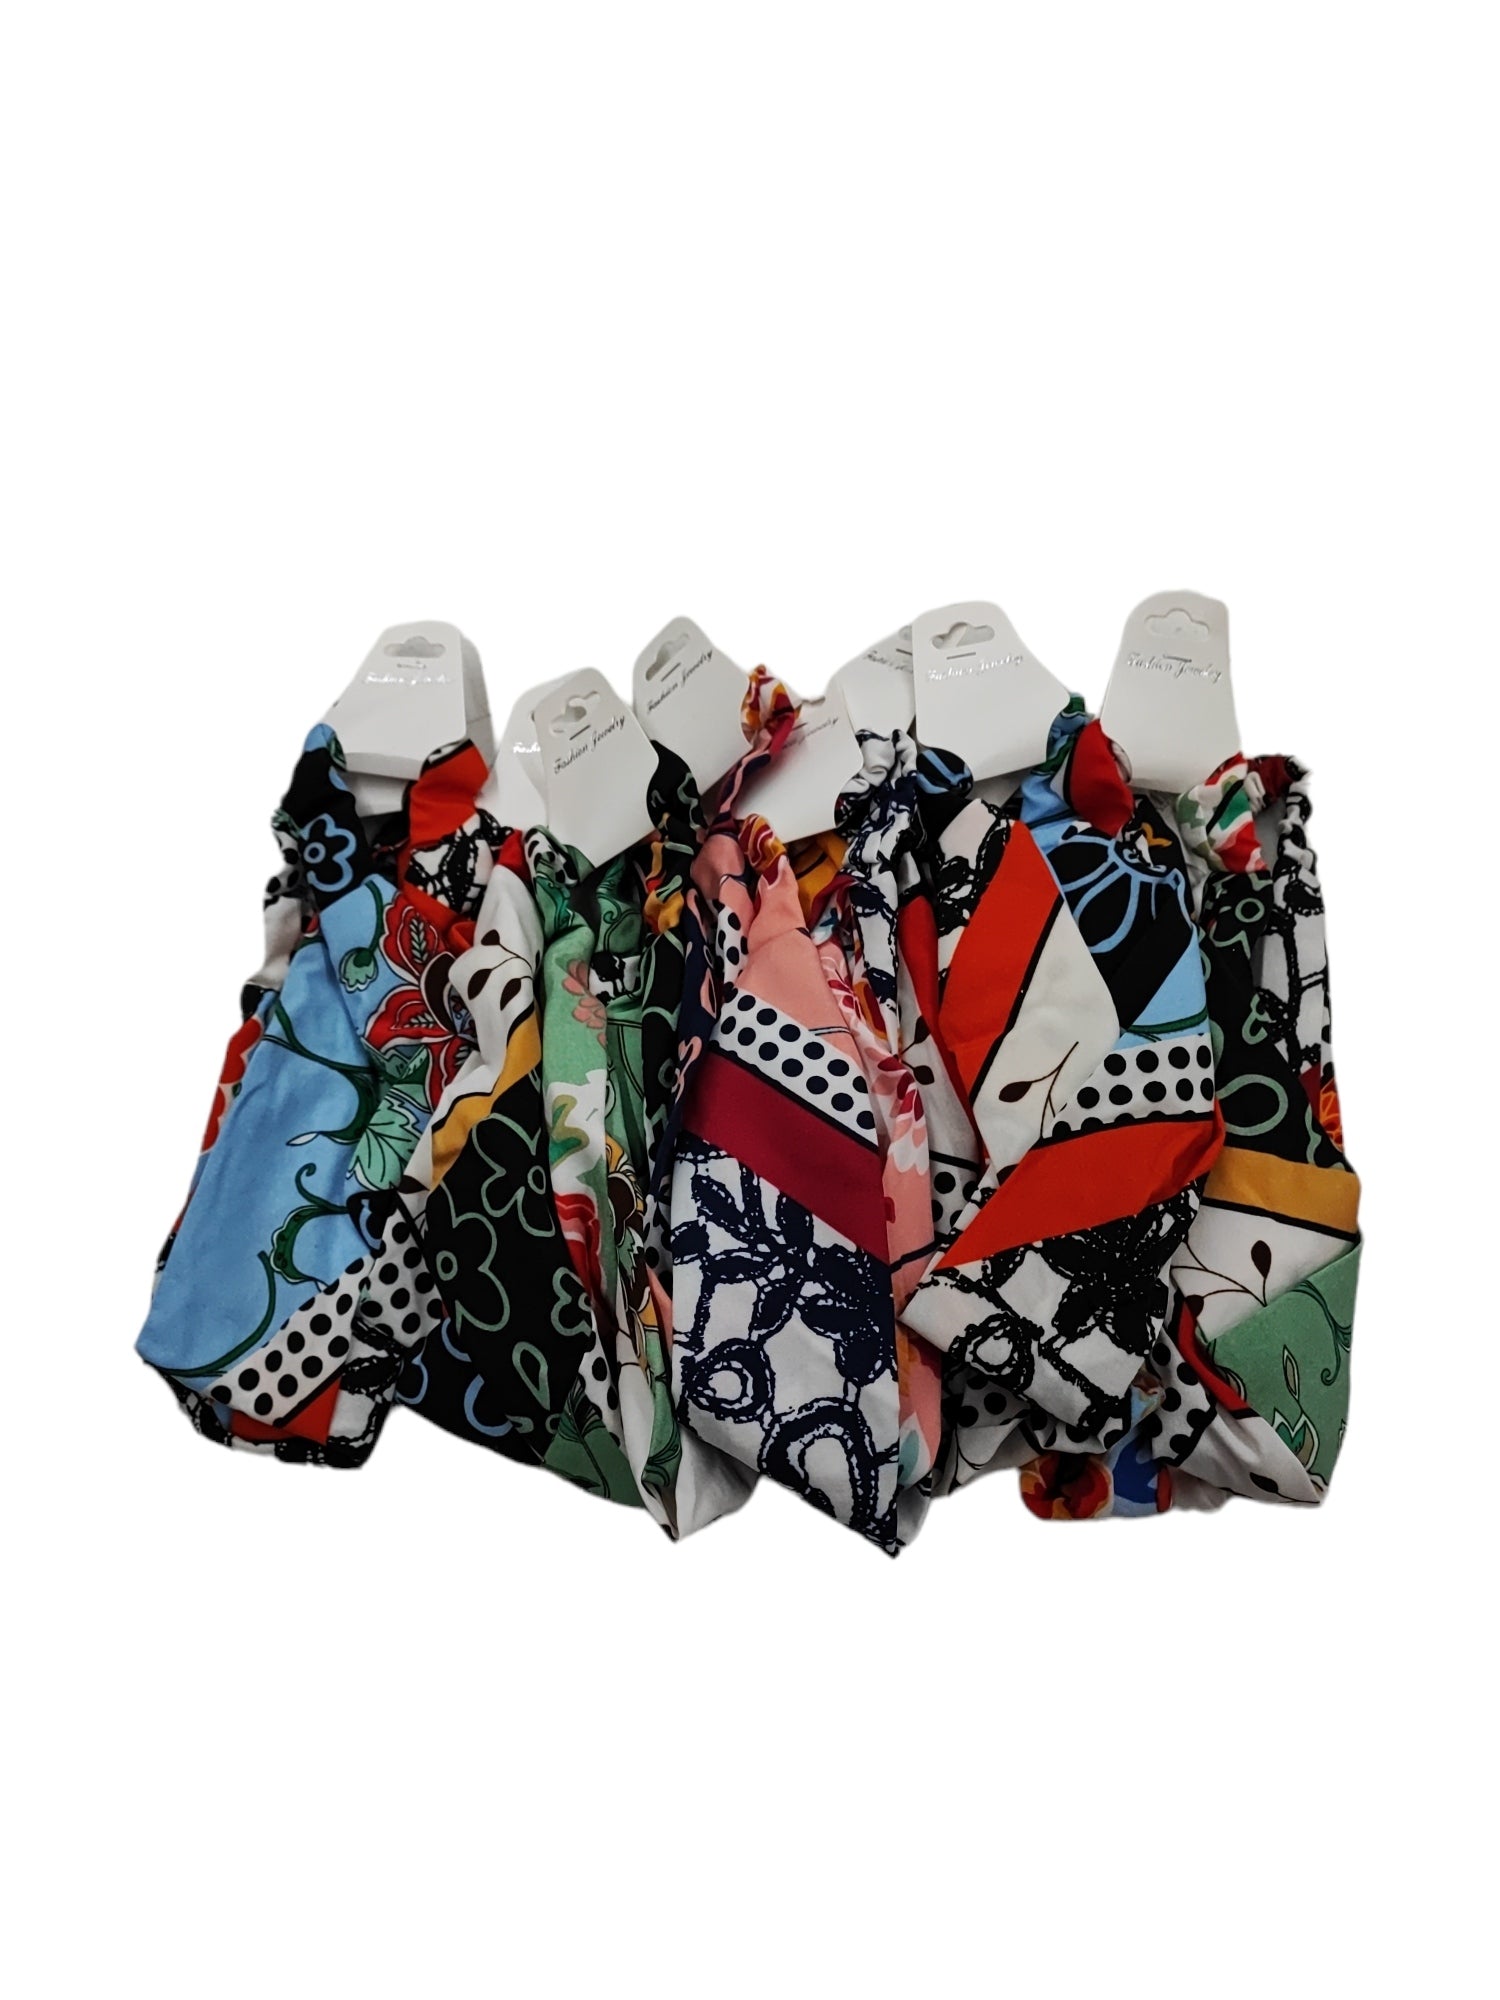 Pattern headbands with polka dot flowers (x12) €0.75/unit